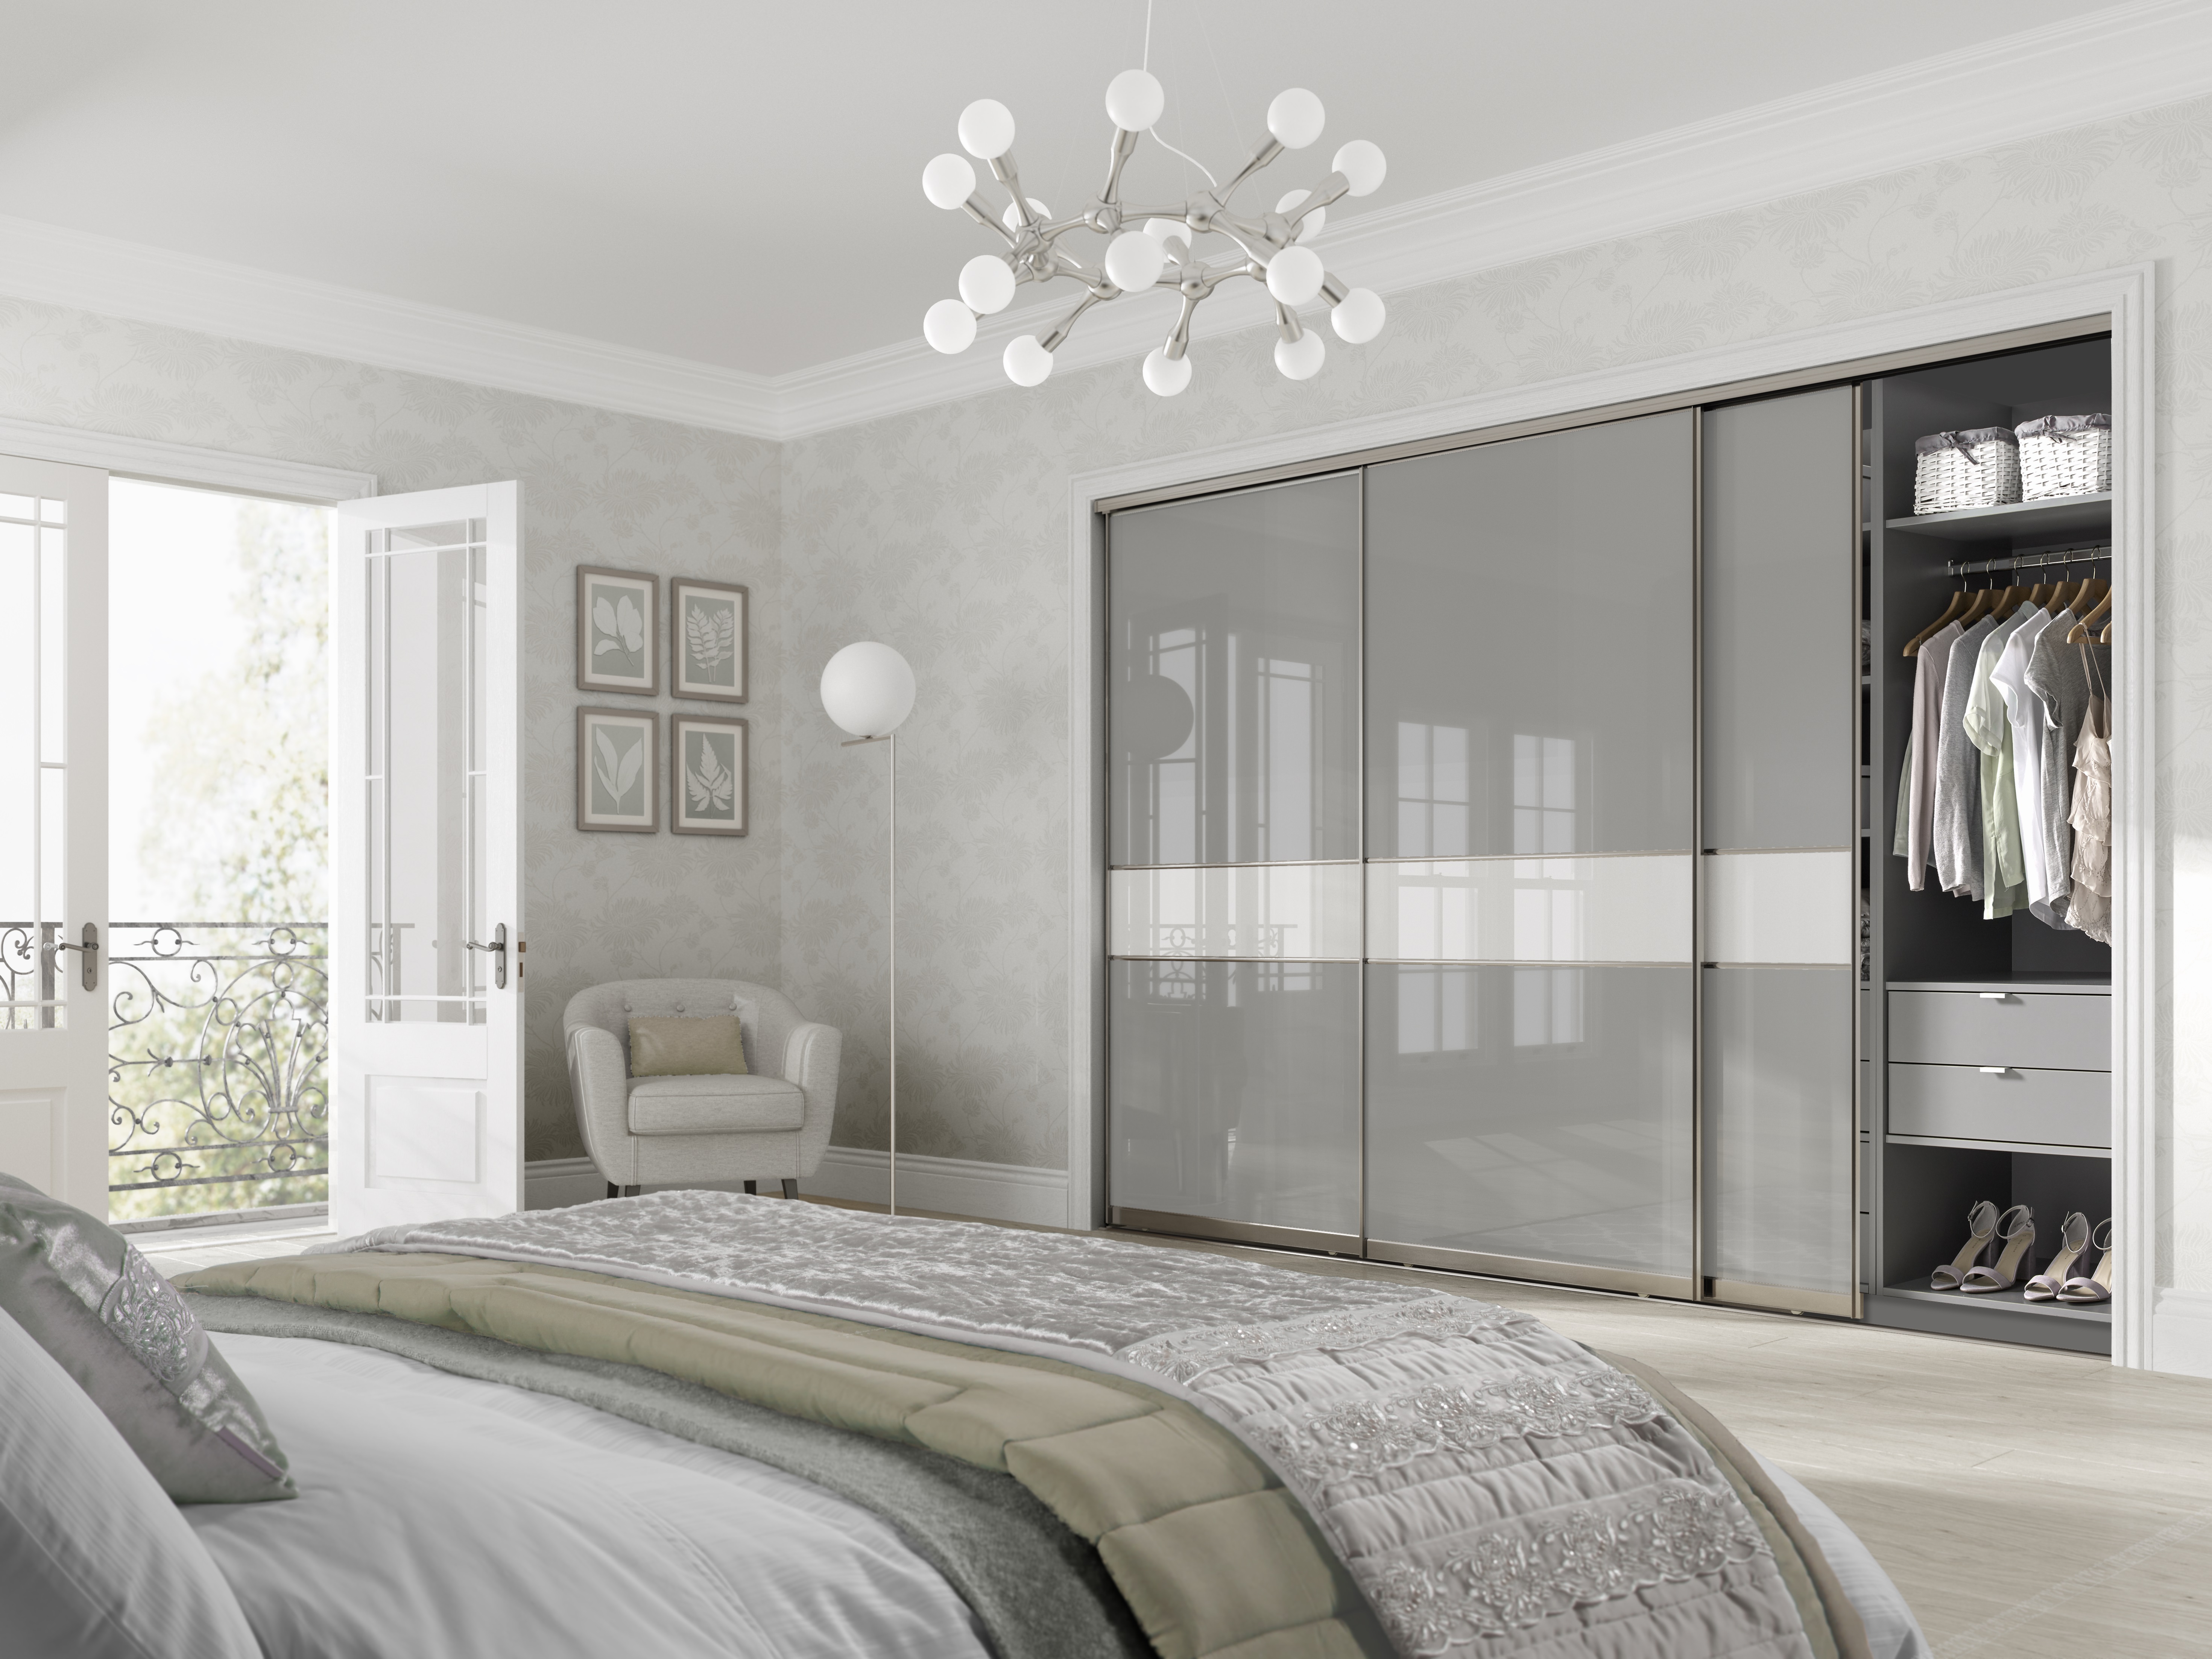 Best Of 56+ Captivating sliding door bedroom furniture Trend Of The Year